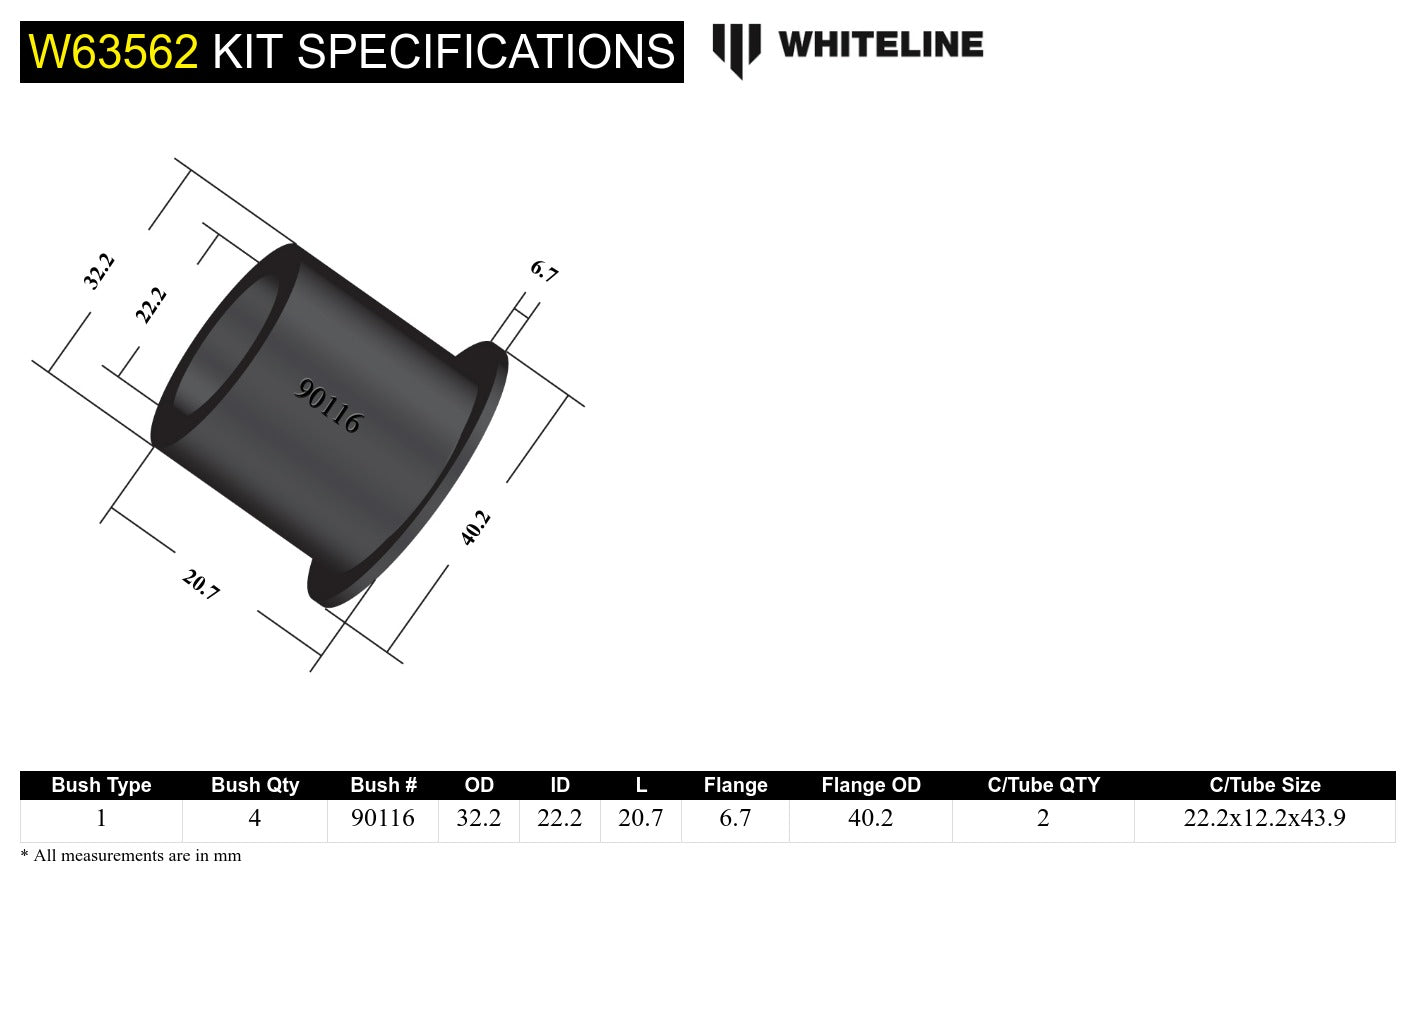 Rear Control Arm - Lower Front Inner Bushing Kit